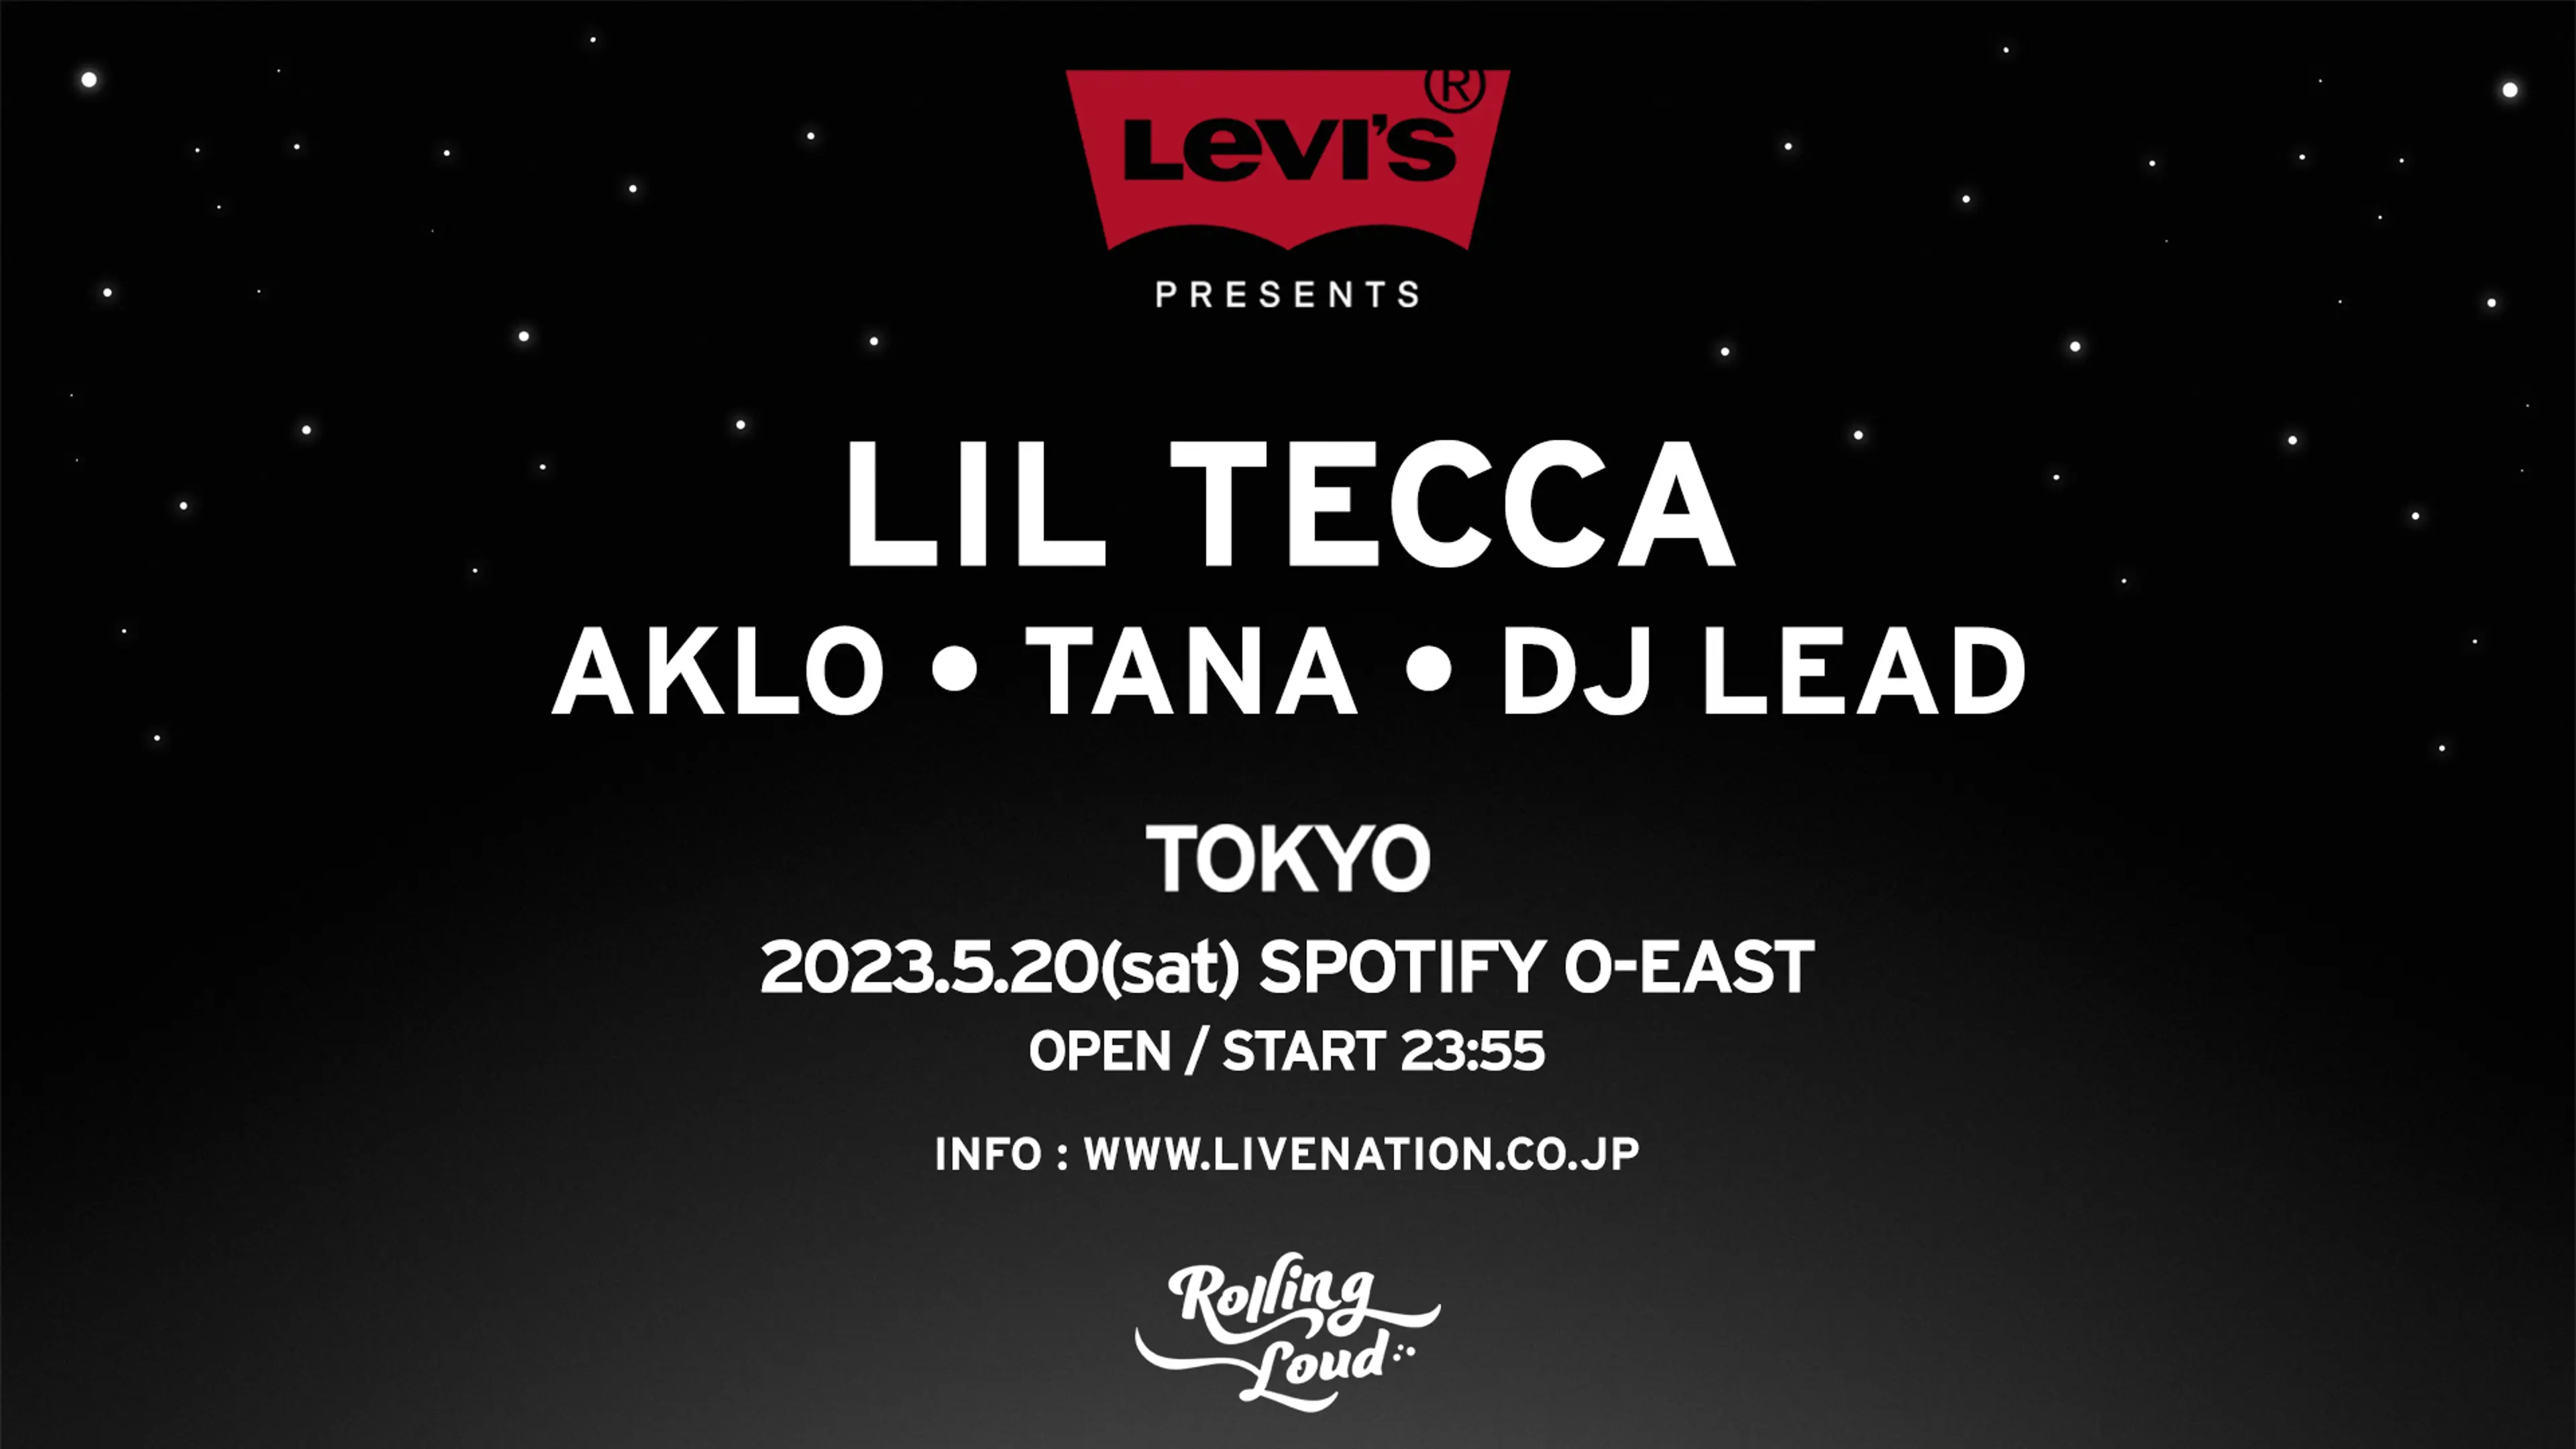 LEVI’S Presents,  LIL TECCA, AKLO, TANA, DJ LEAD A Rolling Loud Production